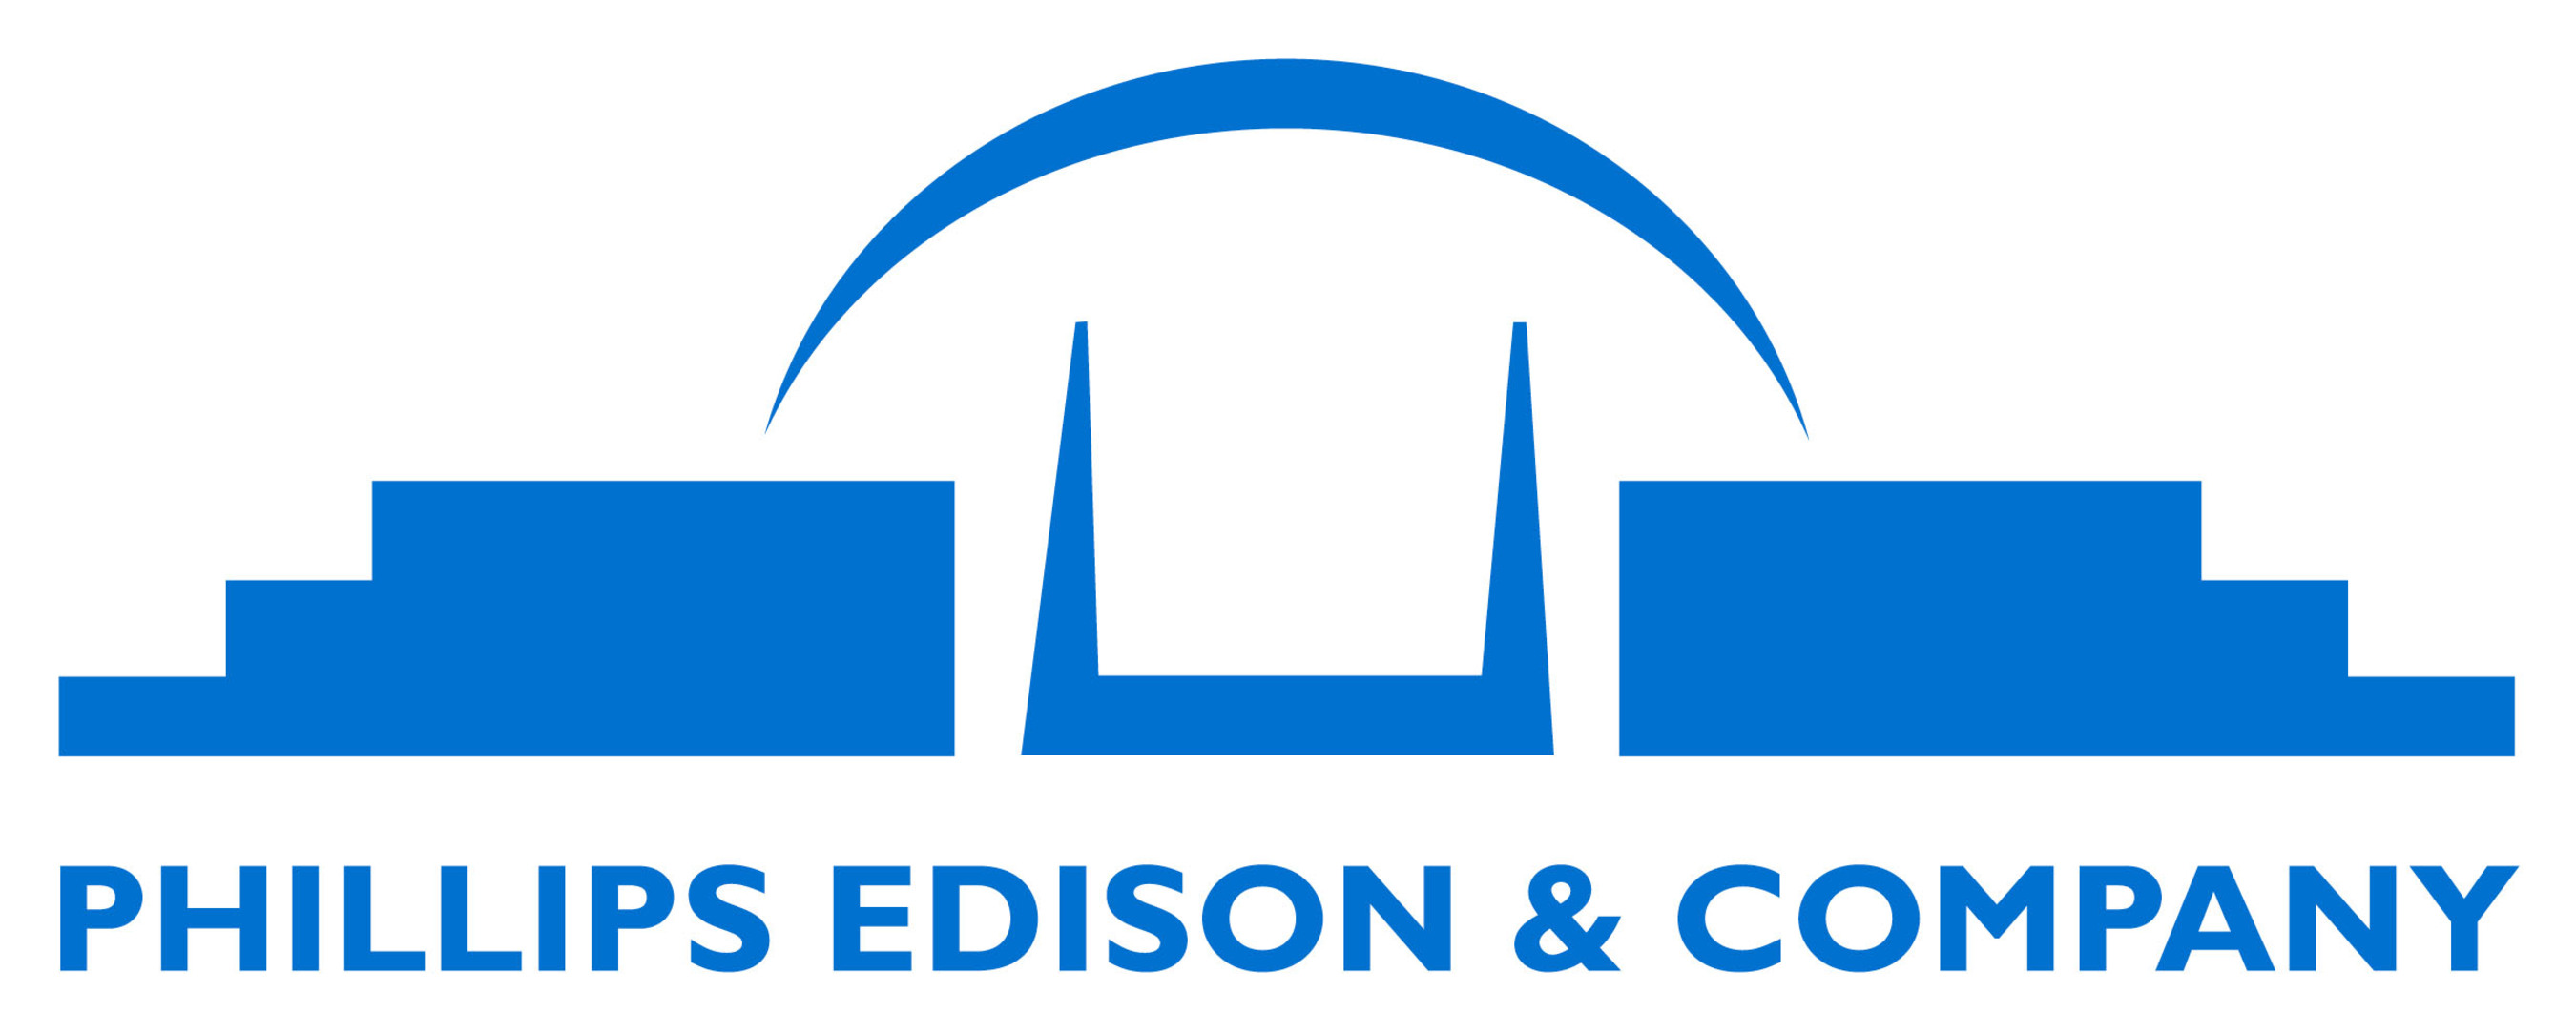 Phillips Edison & Company.